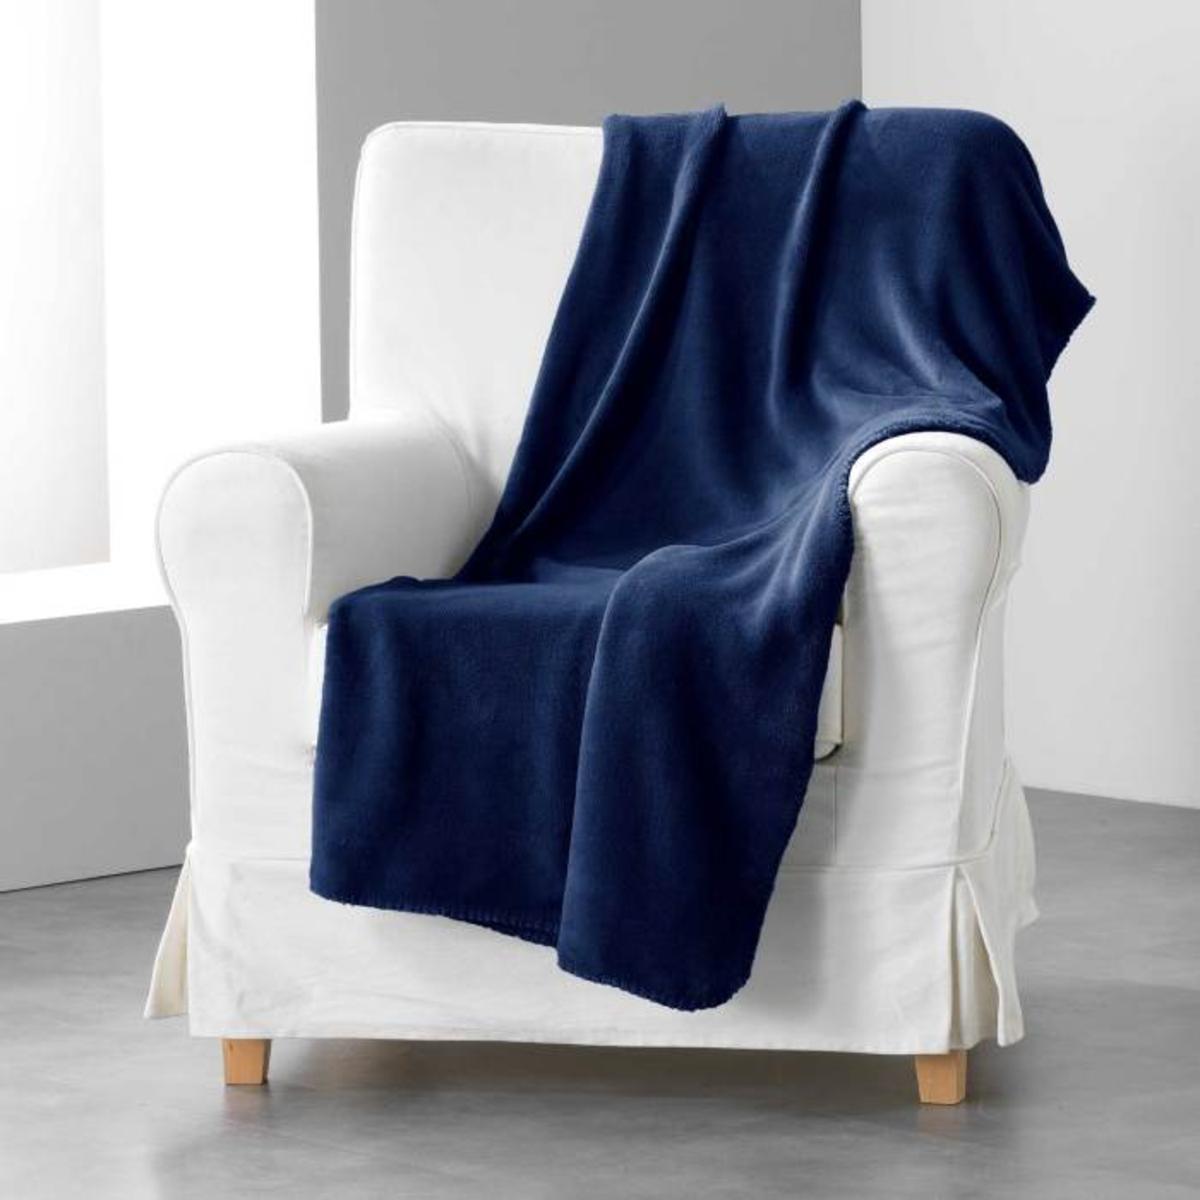 Jeté de fauteuil Louna - 125 x 150 cm - Bleu nuit